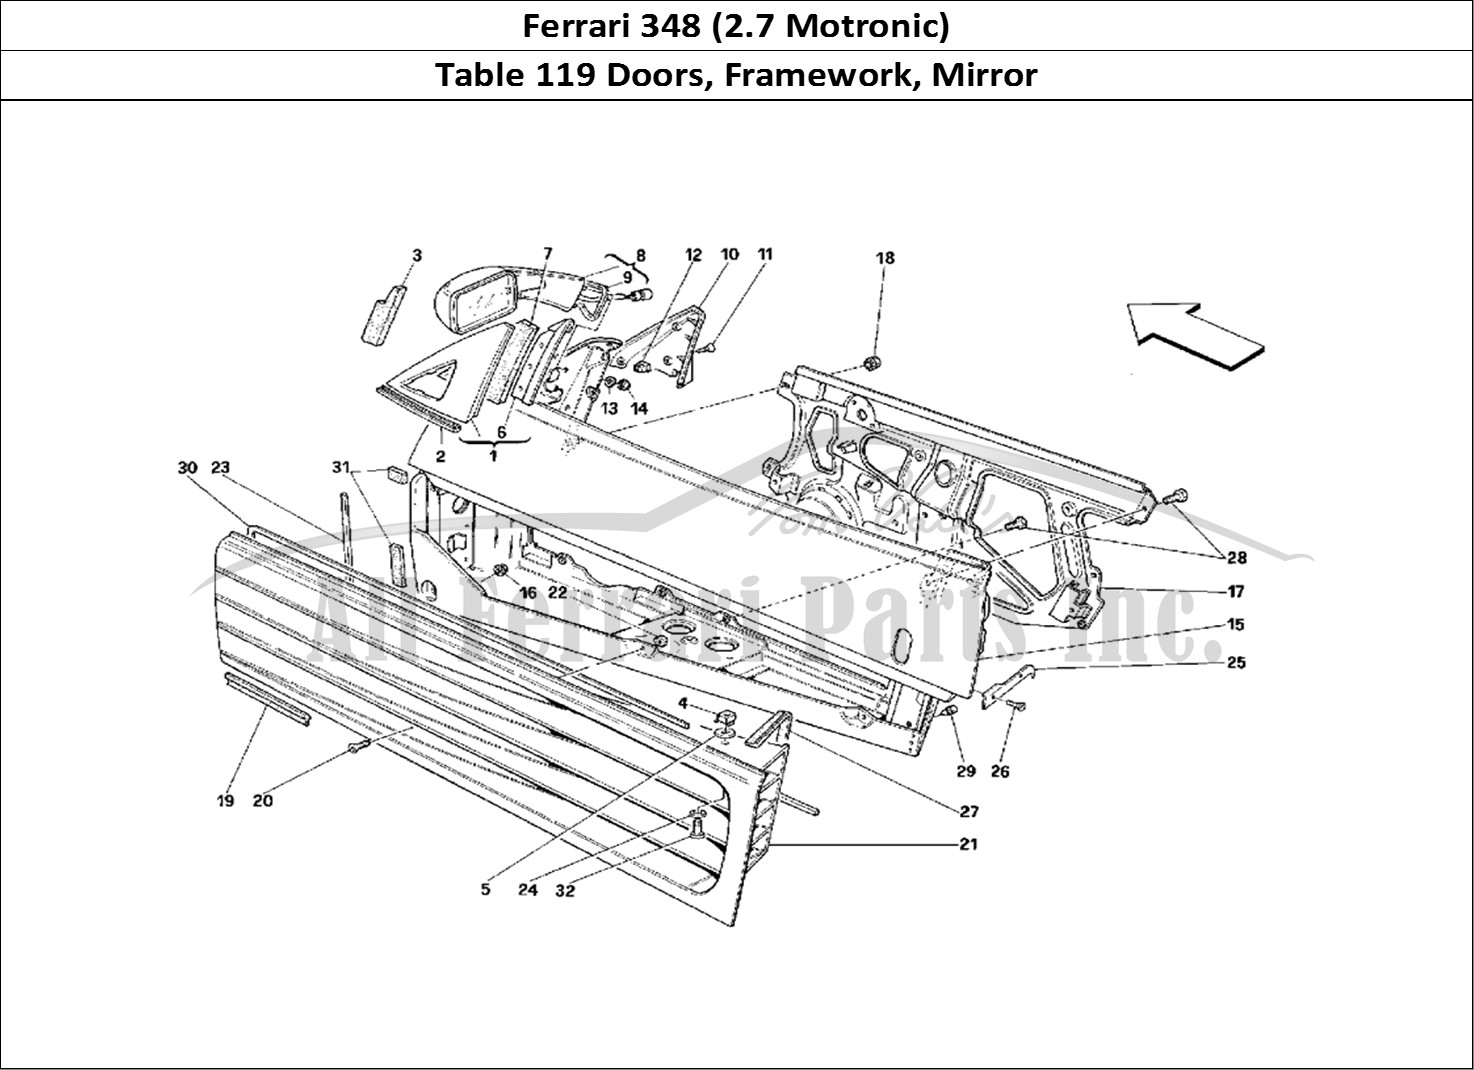 Ferrari Parts Ferrari 348 (2.7 Motronic) Page 119 Doors - Framework and Rea